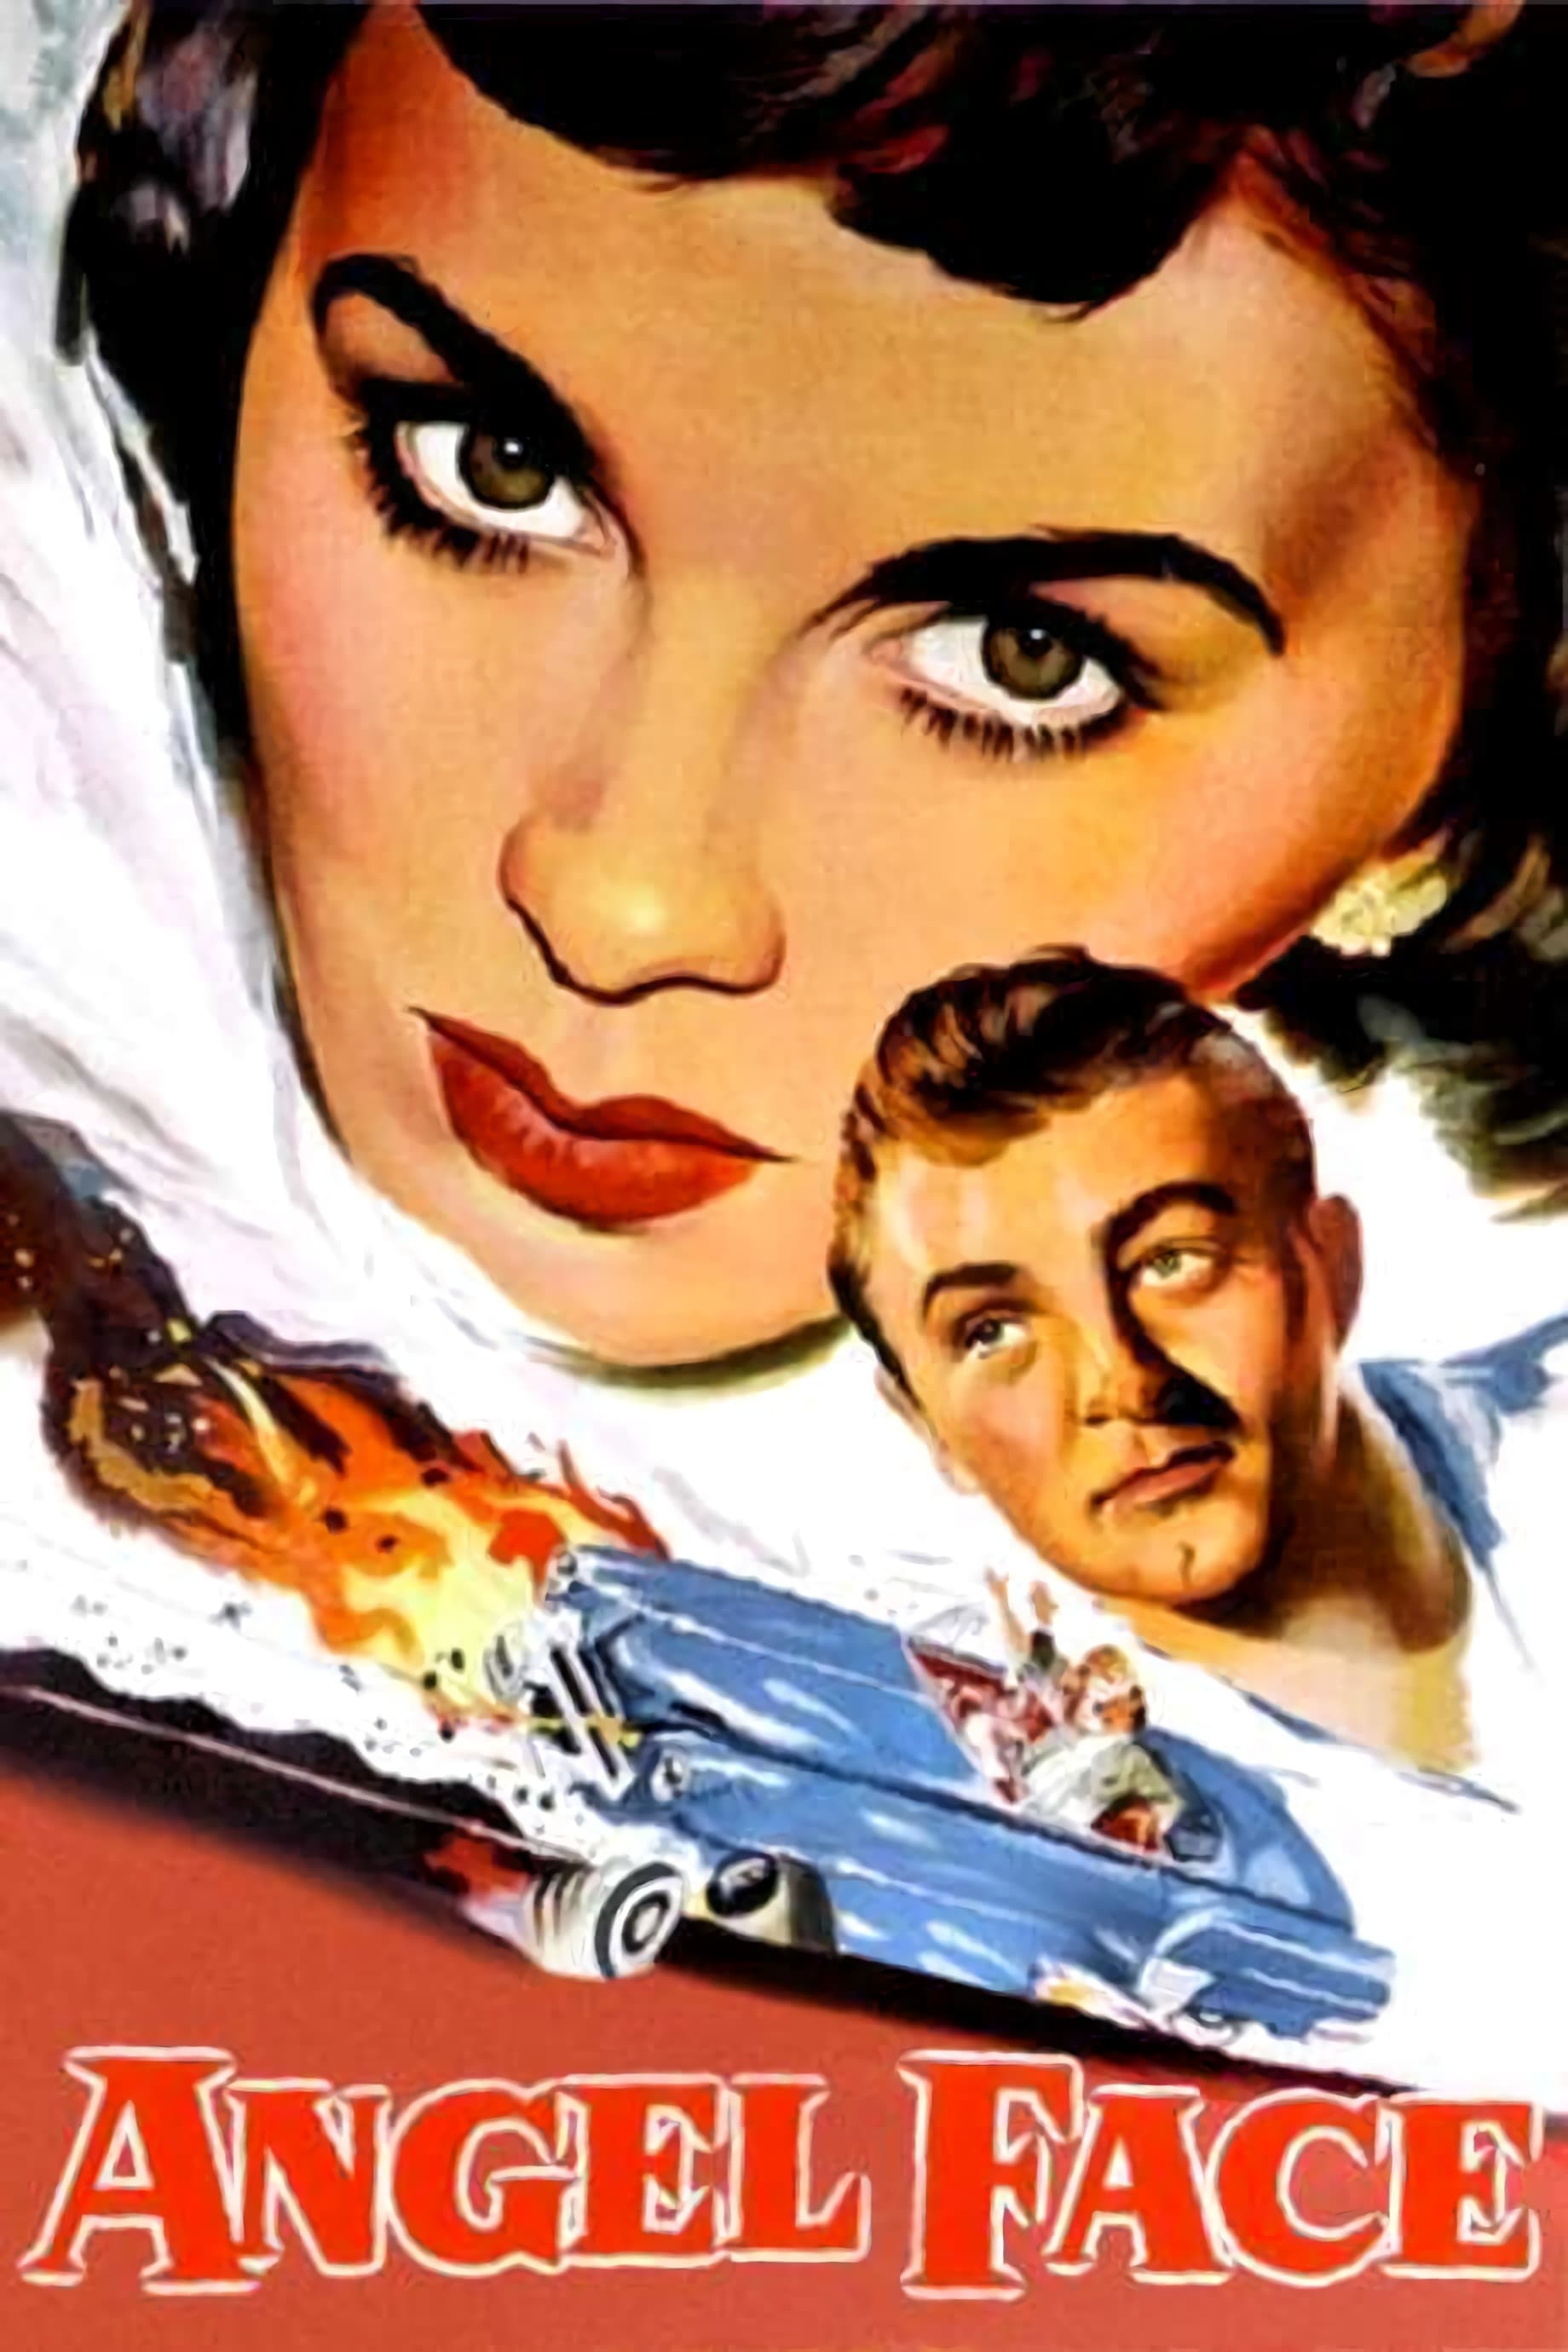 Angel Face (1953)